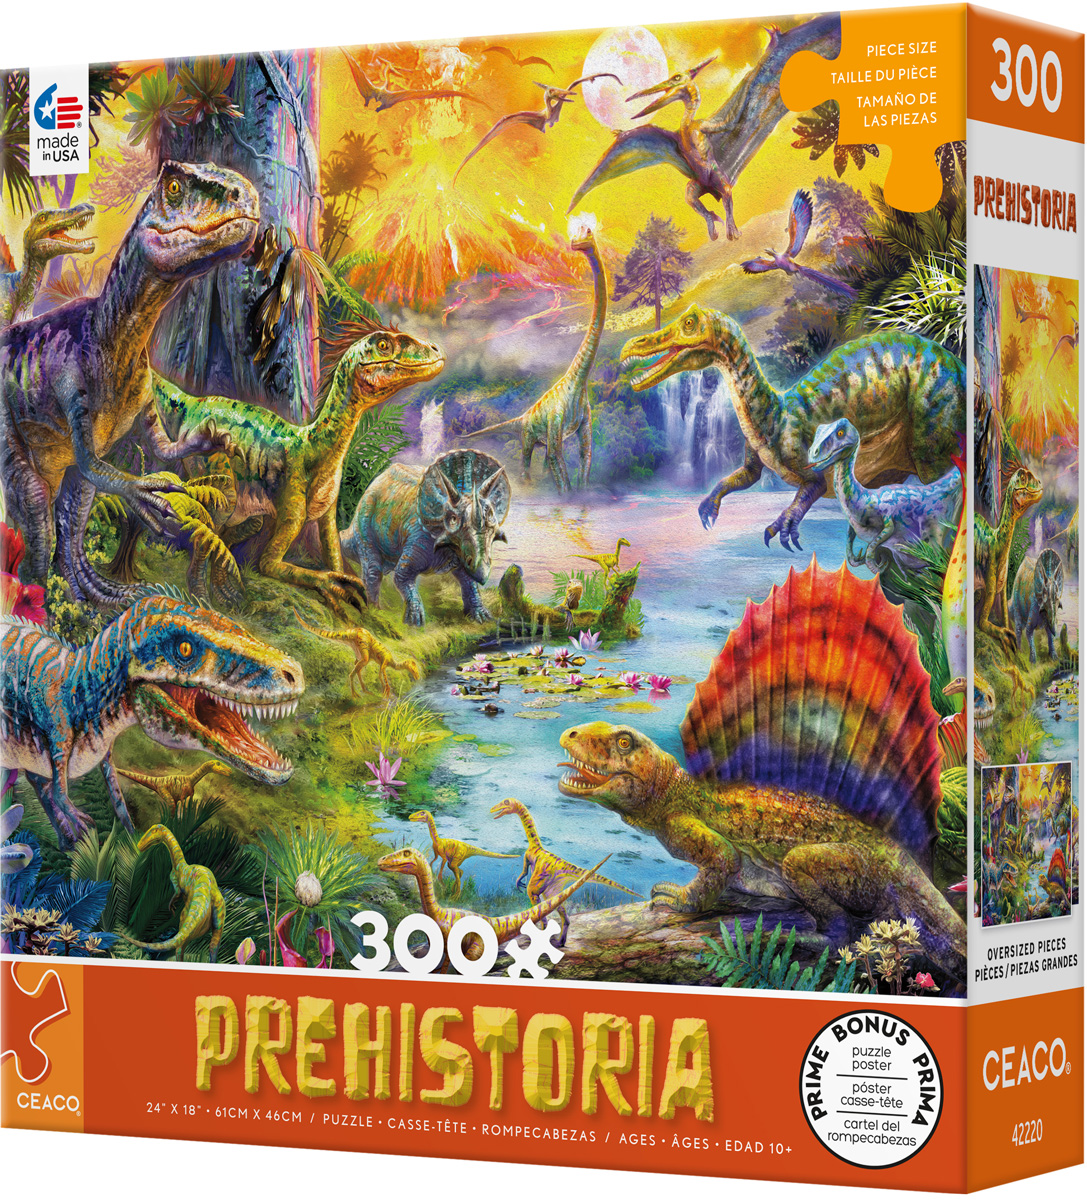 Prehistoria - Dino Landscape